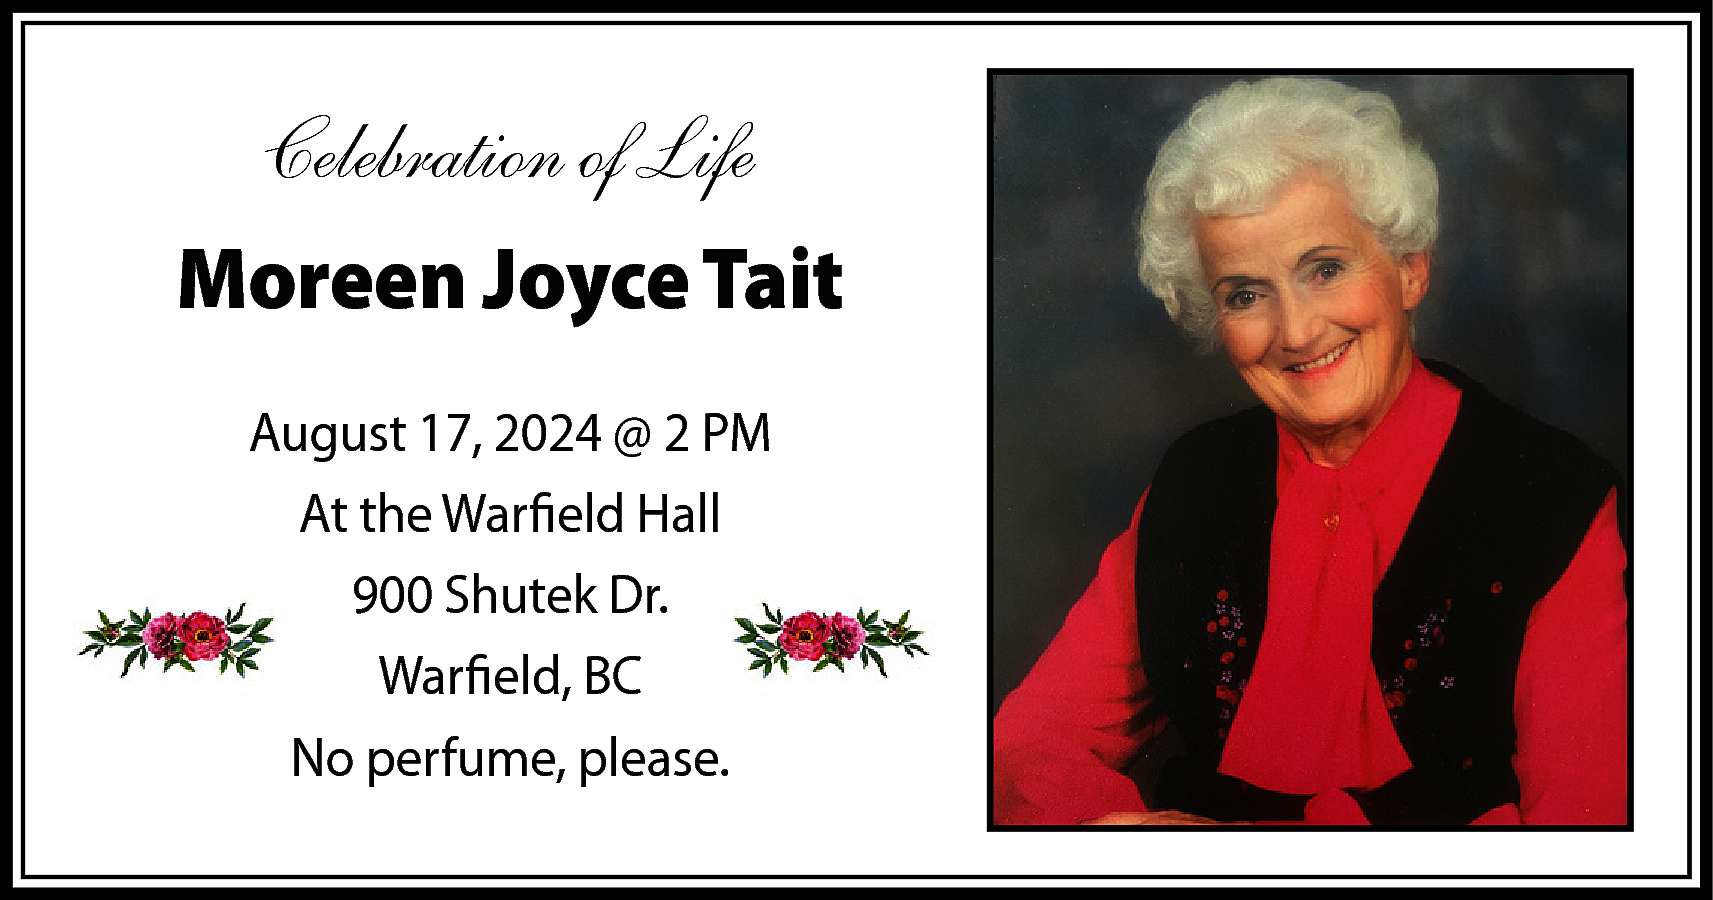 Celebration of Life <br>Moreen Joyce  Celebration of Life  Moreen Joyce Tait  August 17, 2024 @ 2 PM  At the Warfield Hall  900 Shutek Dr.  Warfield, BC  No perfume, please.    